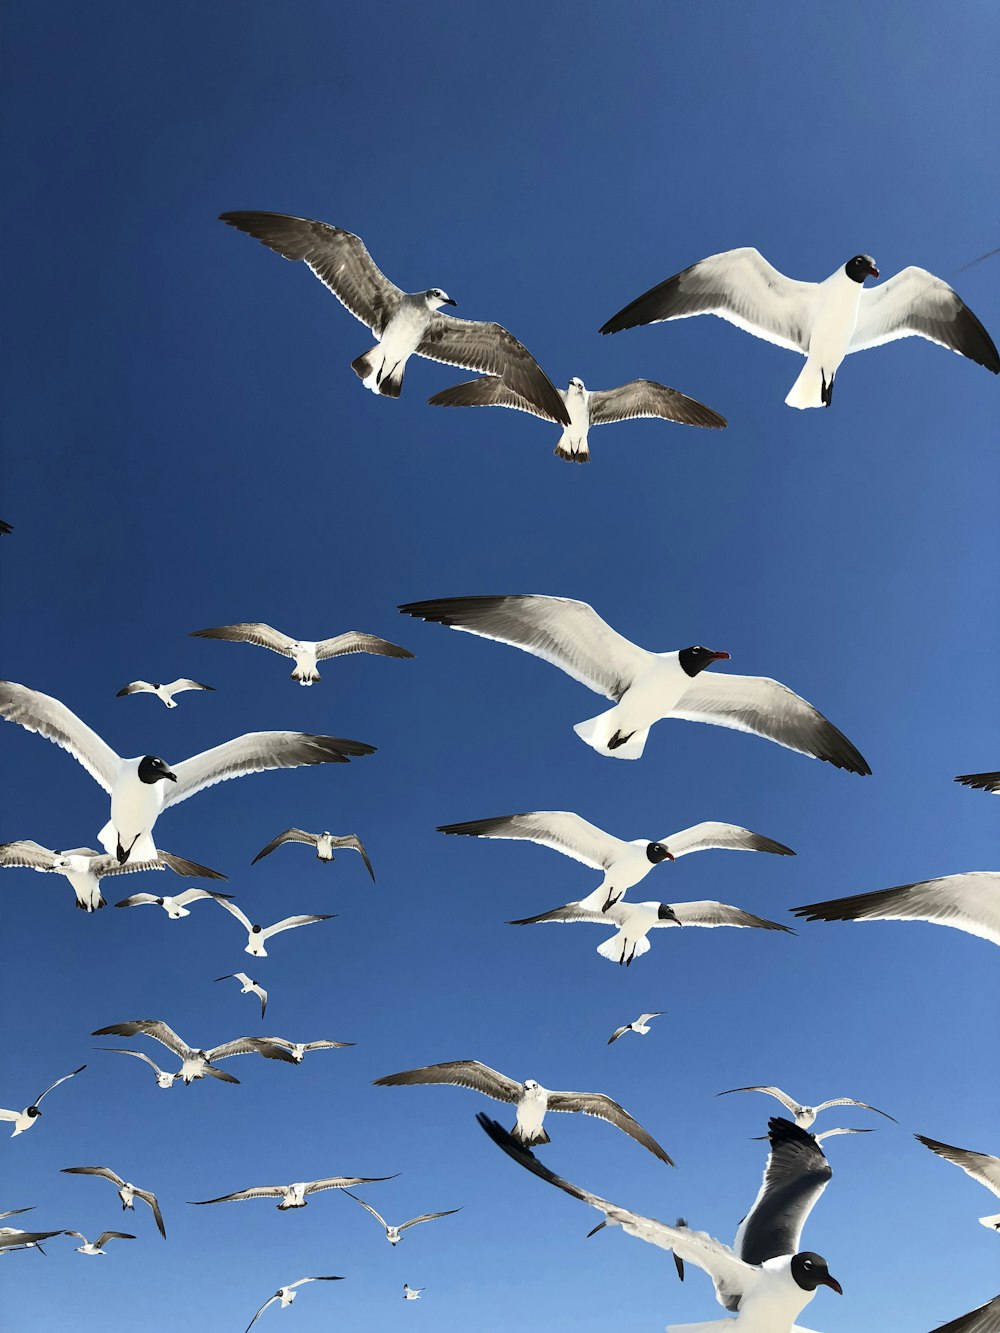 flying birds in the sky photo - Free Bird Image on Unsplash